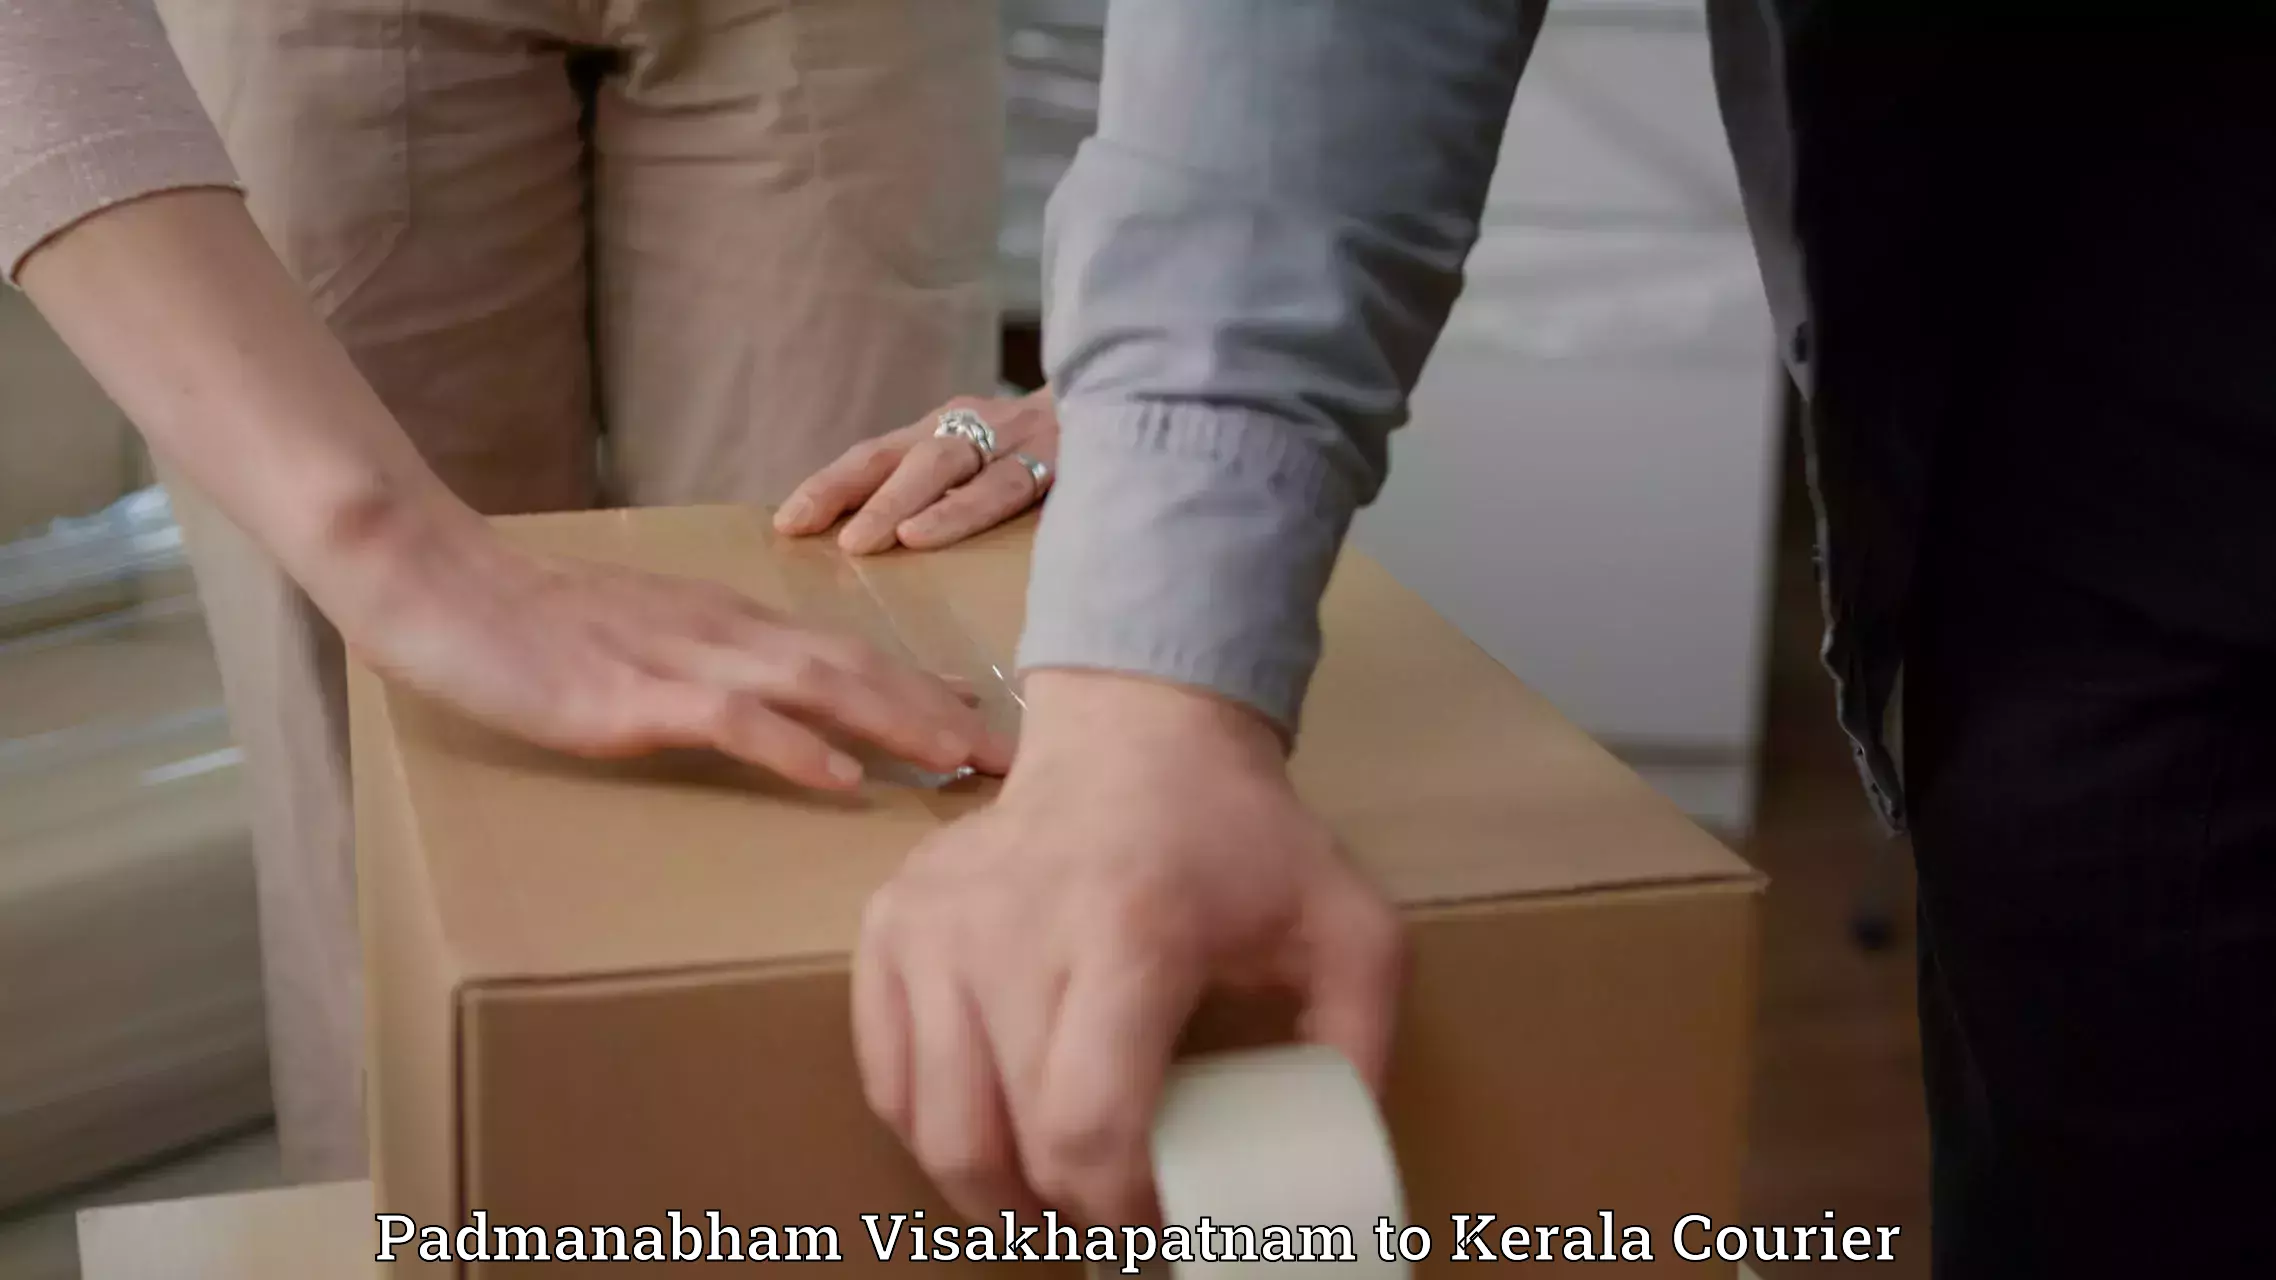 Modern delivery technologies Padmanabham Visakhapatnam to Kattappana